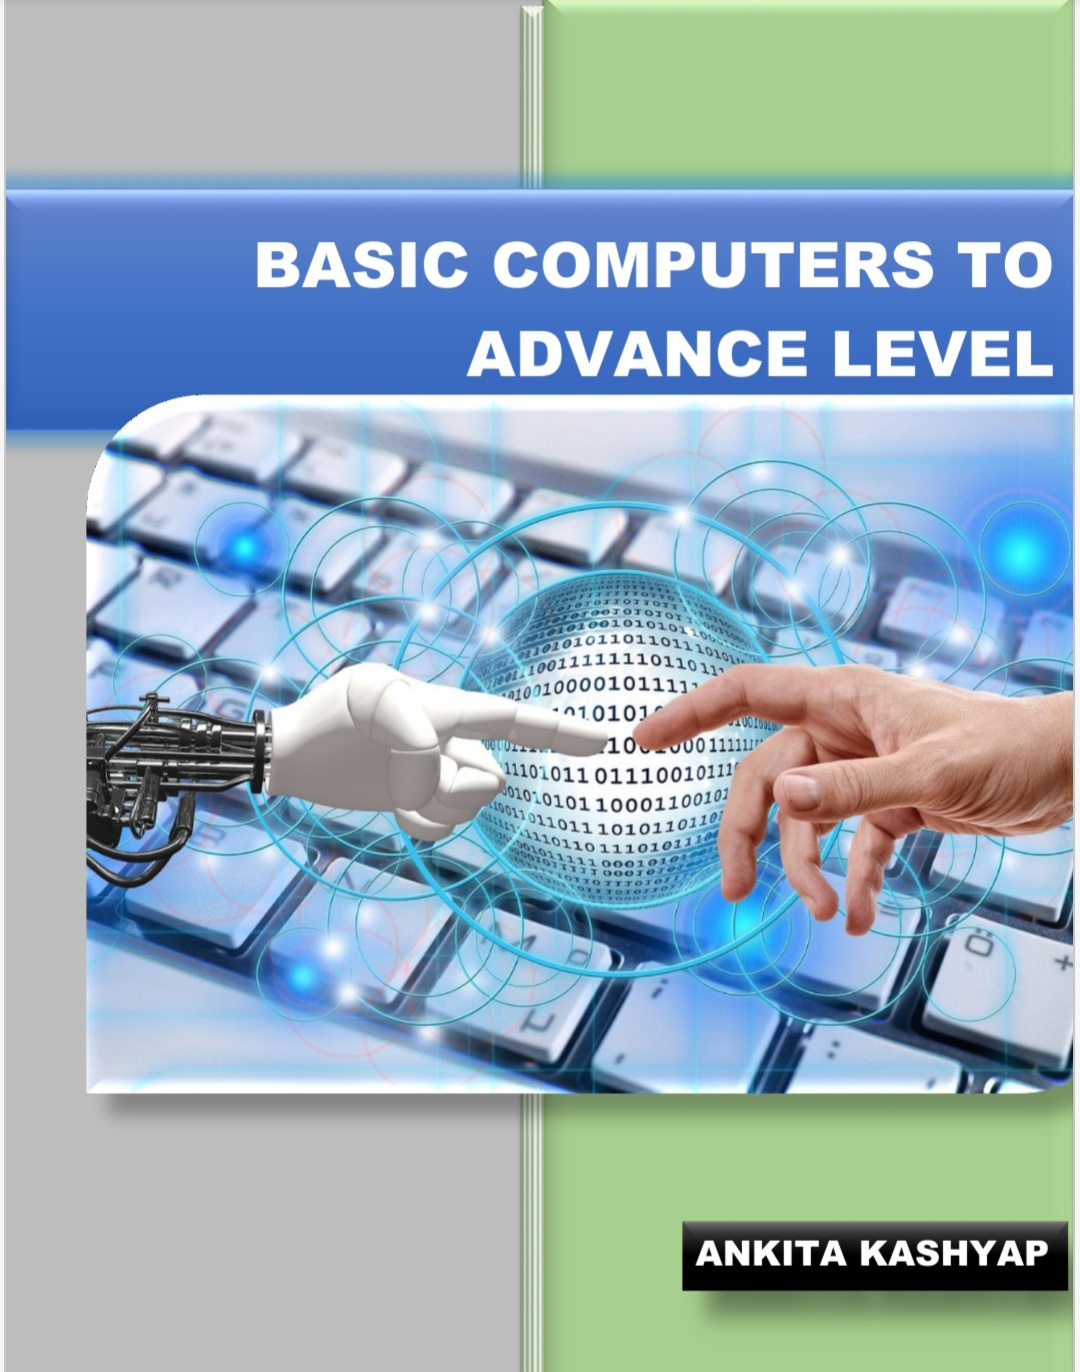 Basic Computers To Advance Level (Advance Batch 1)